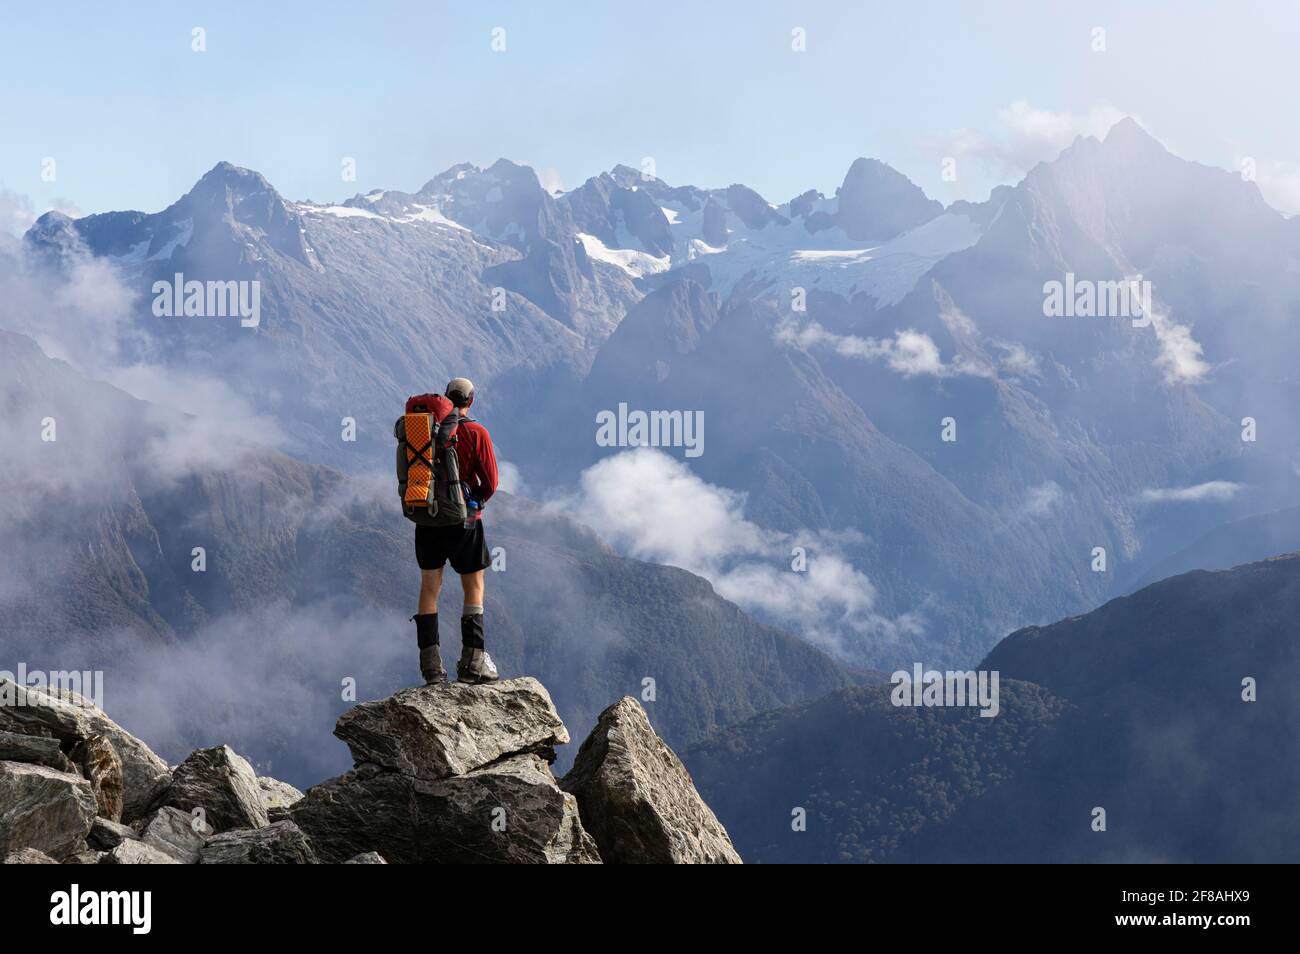 Man on Mountain with amazing views, New Zealand Stock Photo